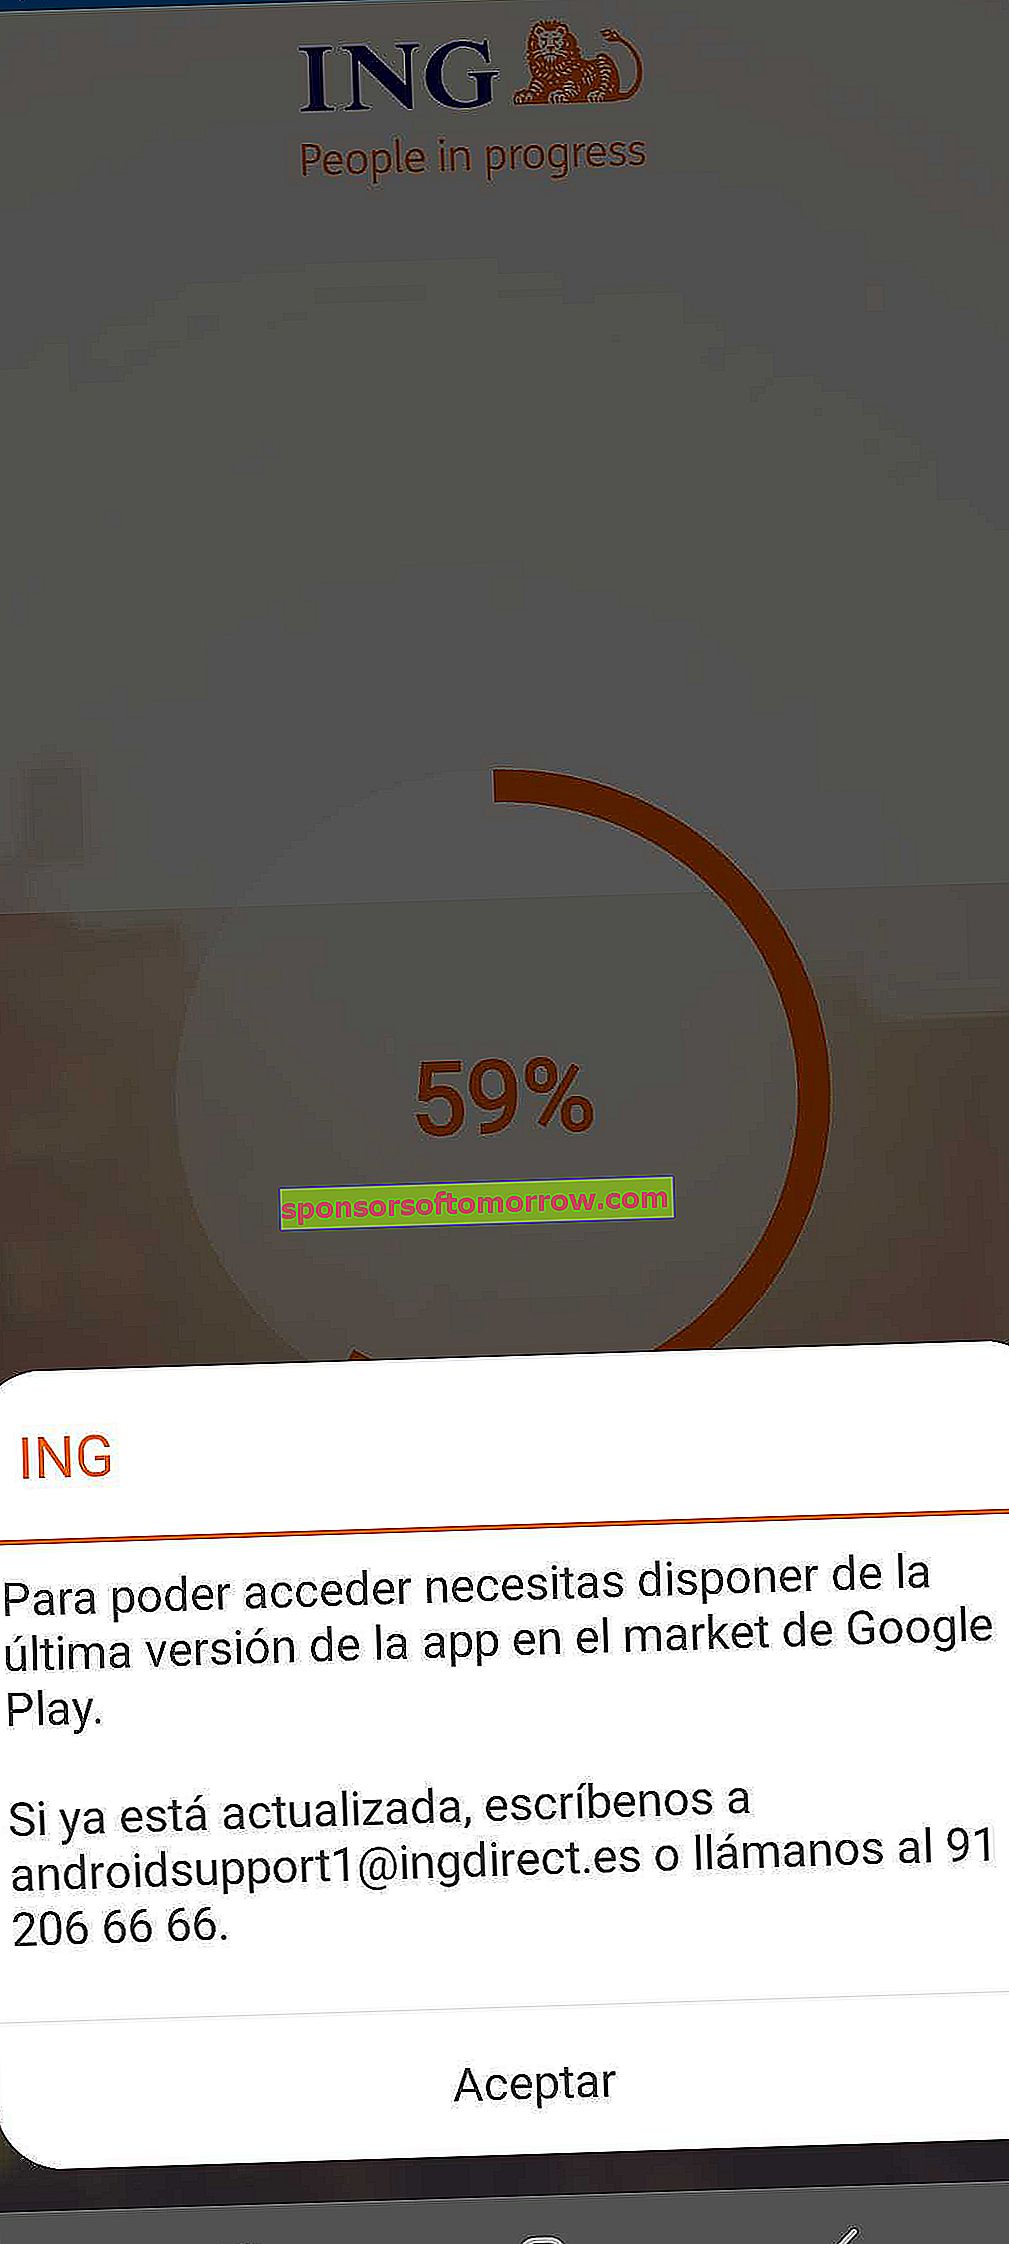 ING Direct app failure